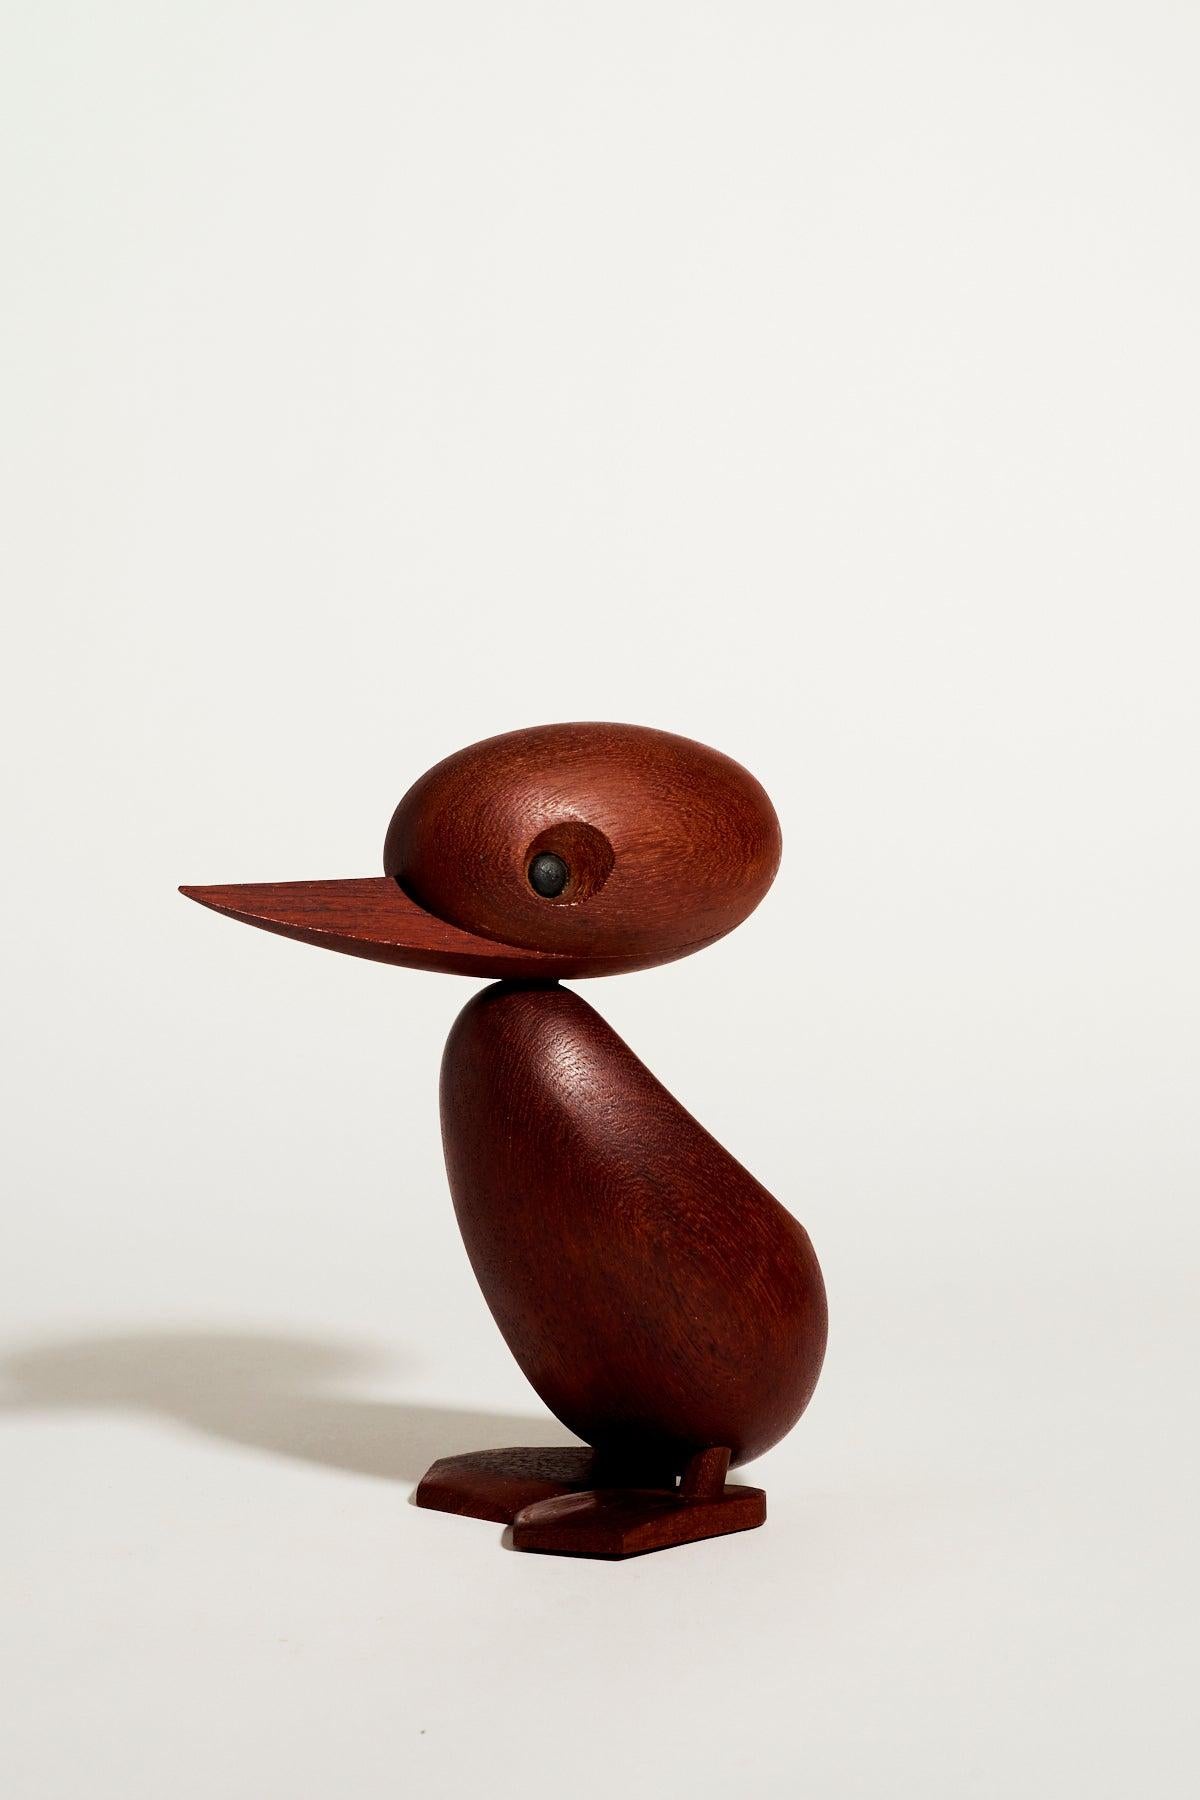 Iconic 1950s Hans Bolling designed teak duck by high quality mid century homewares maker Torben Orskov.